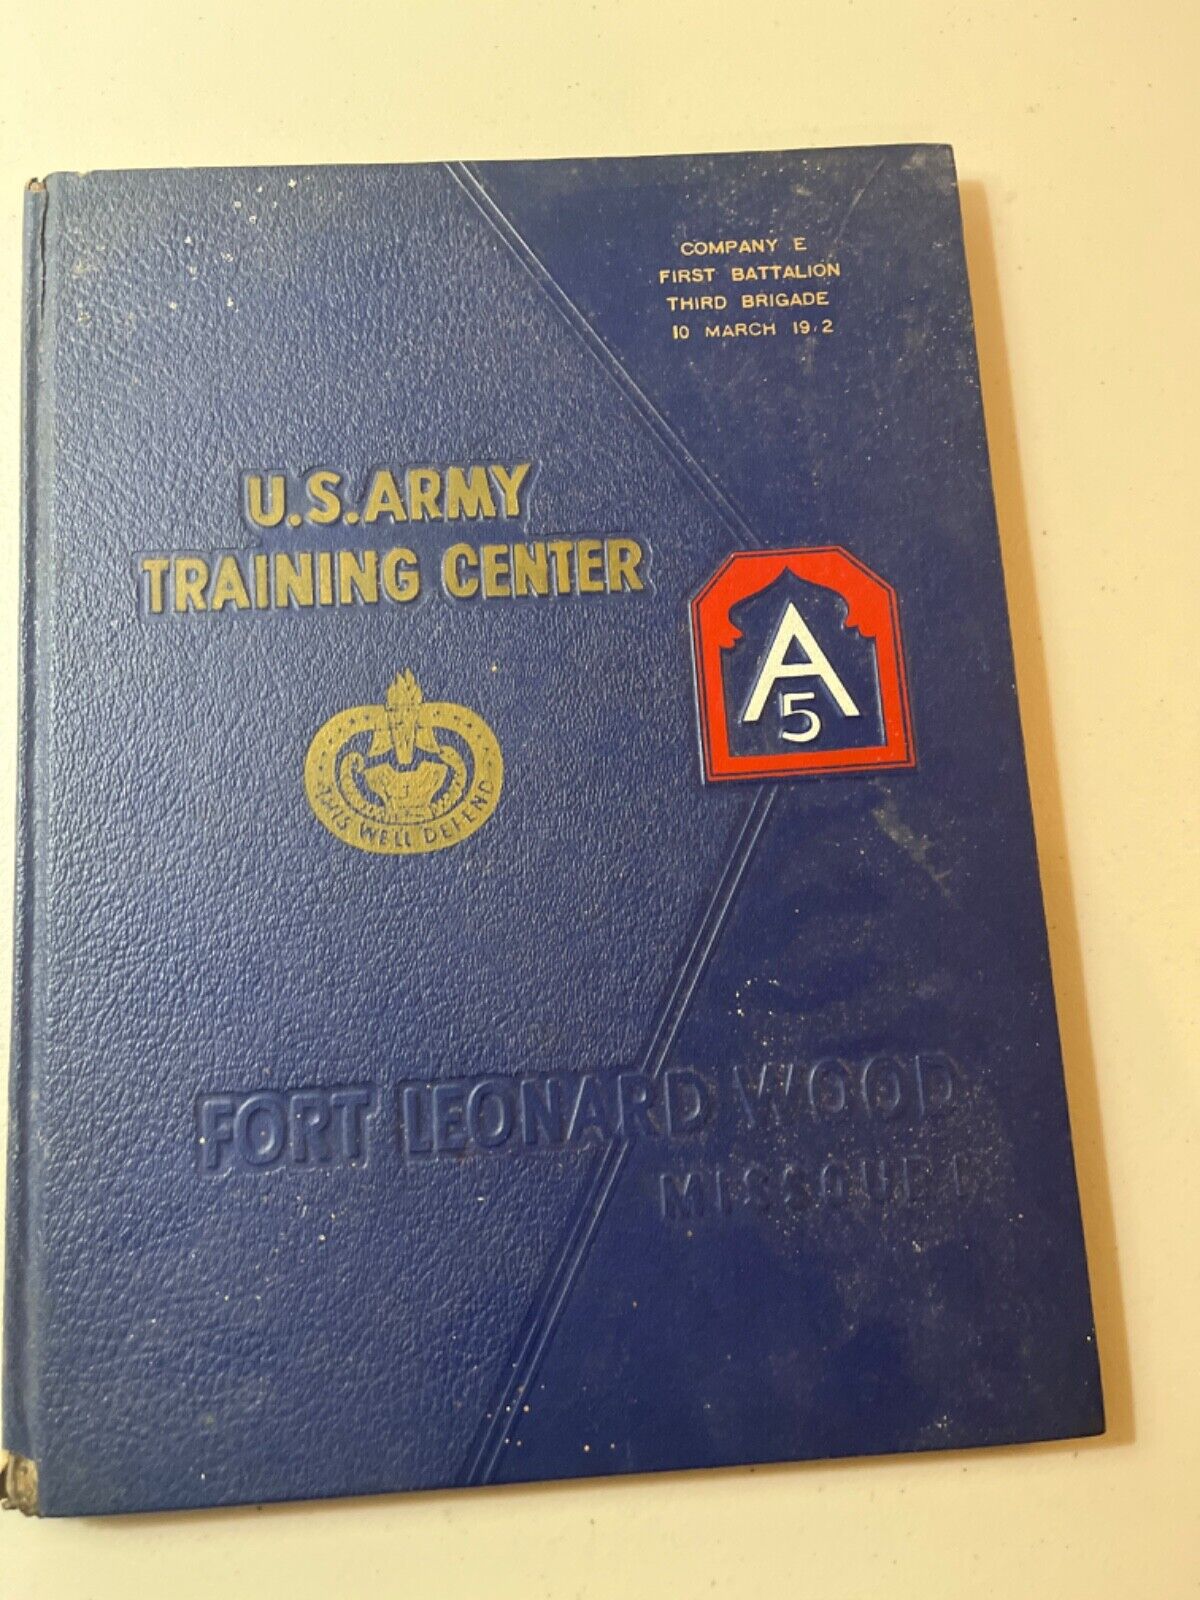 U.S. Army Training Center Fort Leonard Wood Missouri March 10, 1972